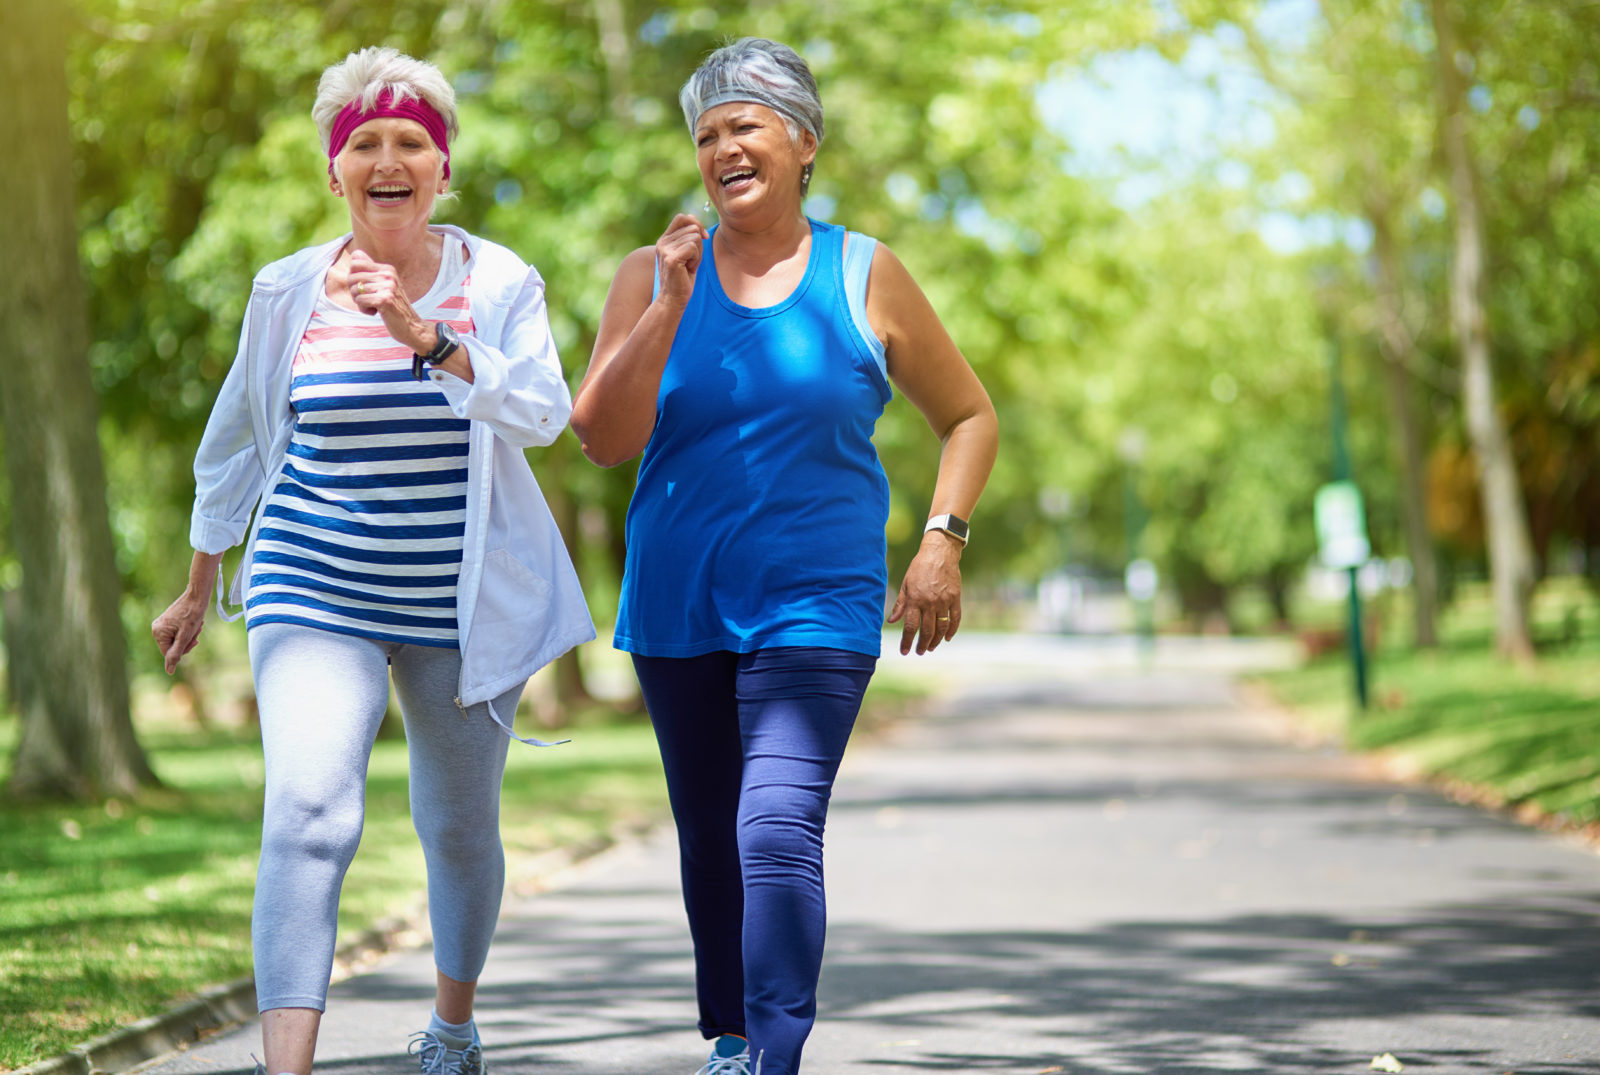 two elderly friends enjoying a run together outdoors